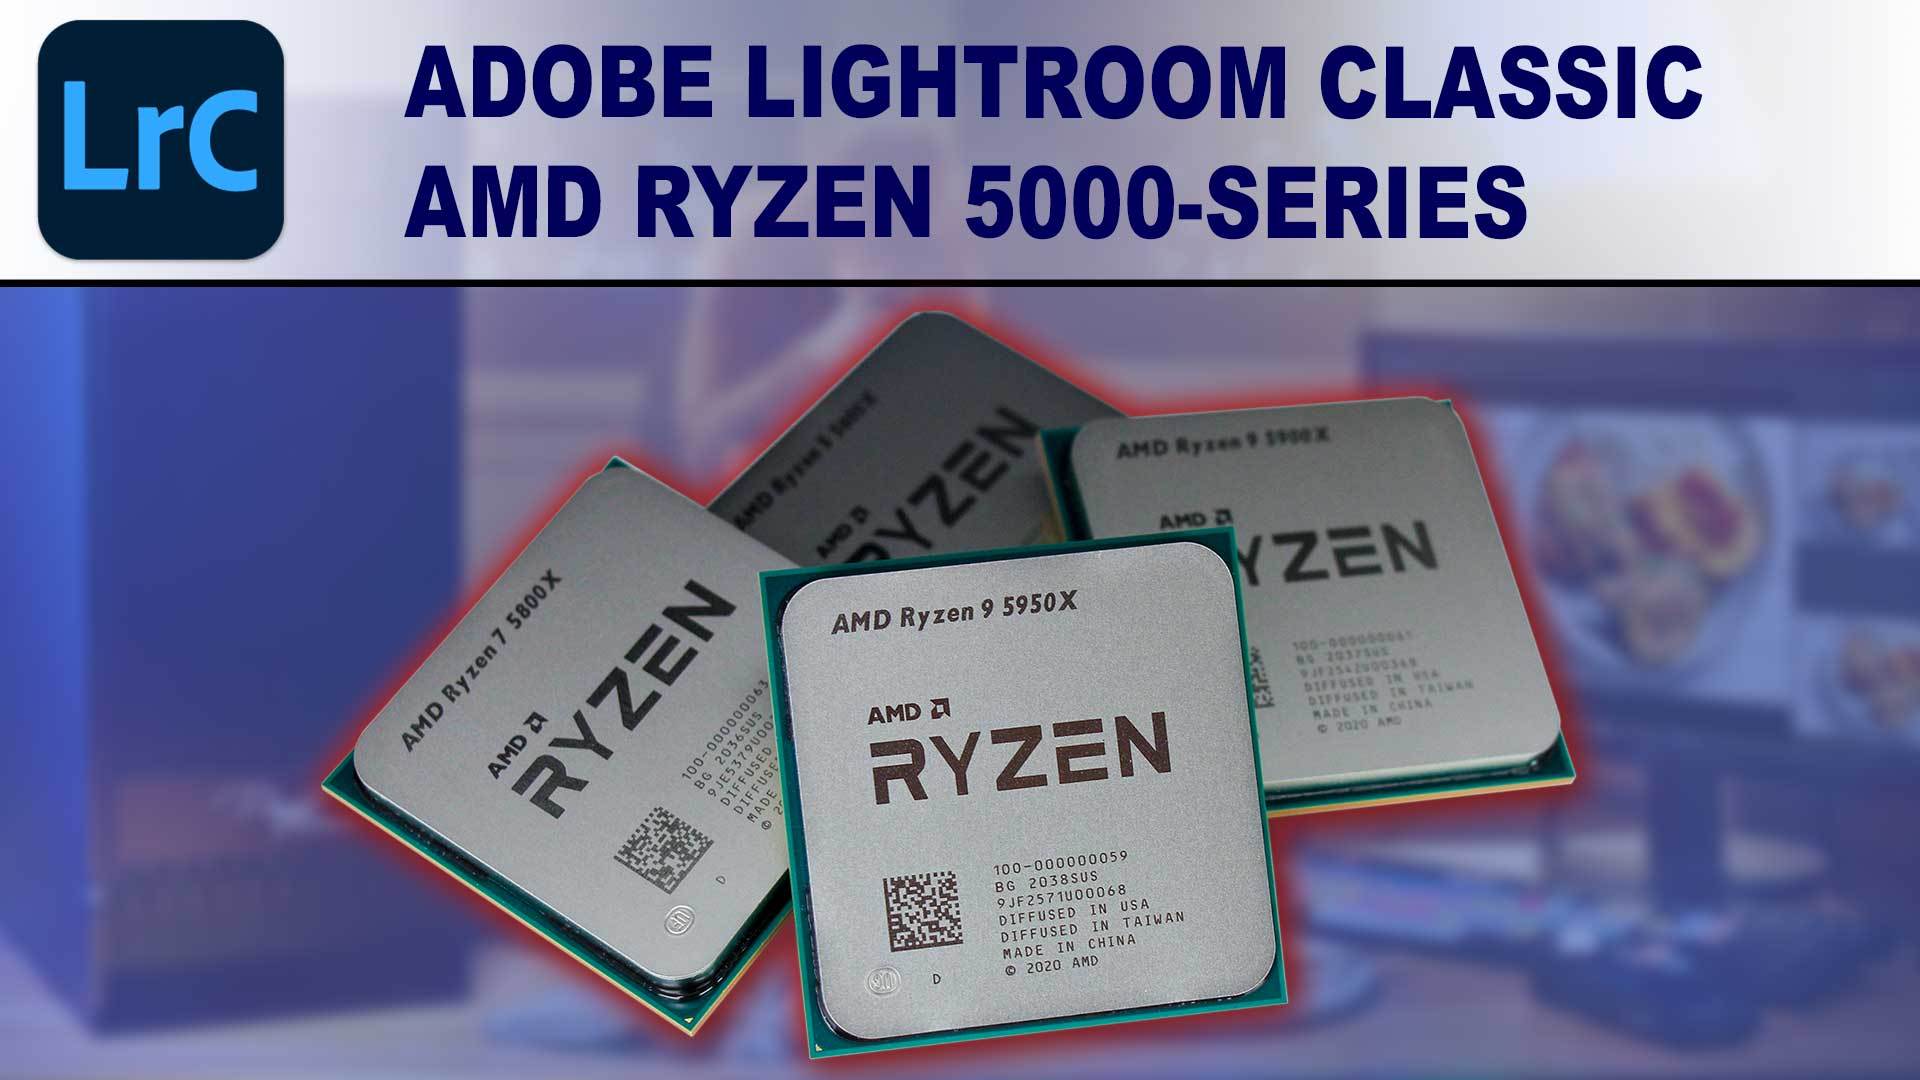 AMD Ryzen 5000-series for Adobe Lightroom Classic